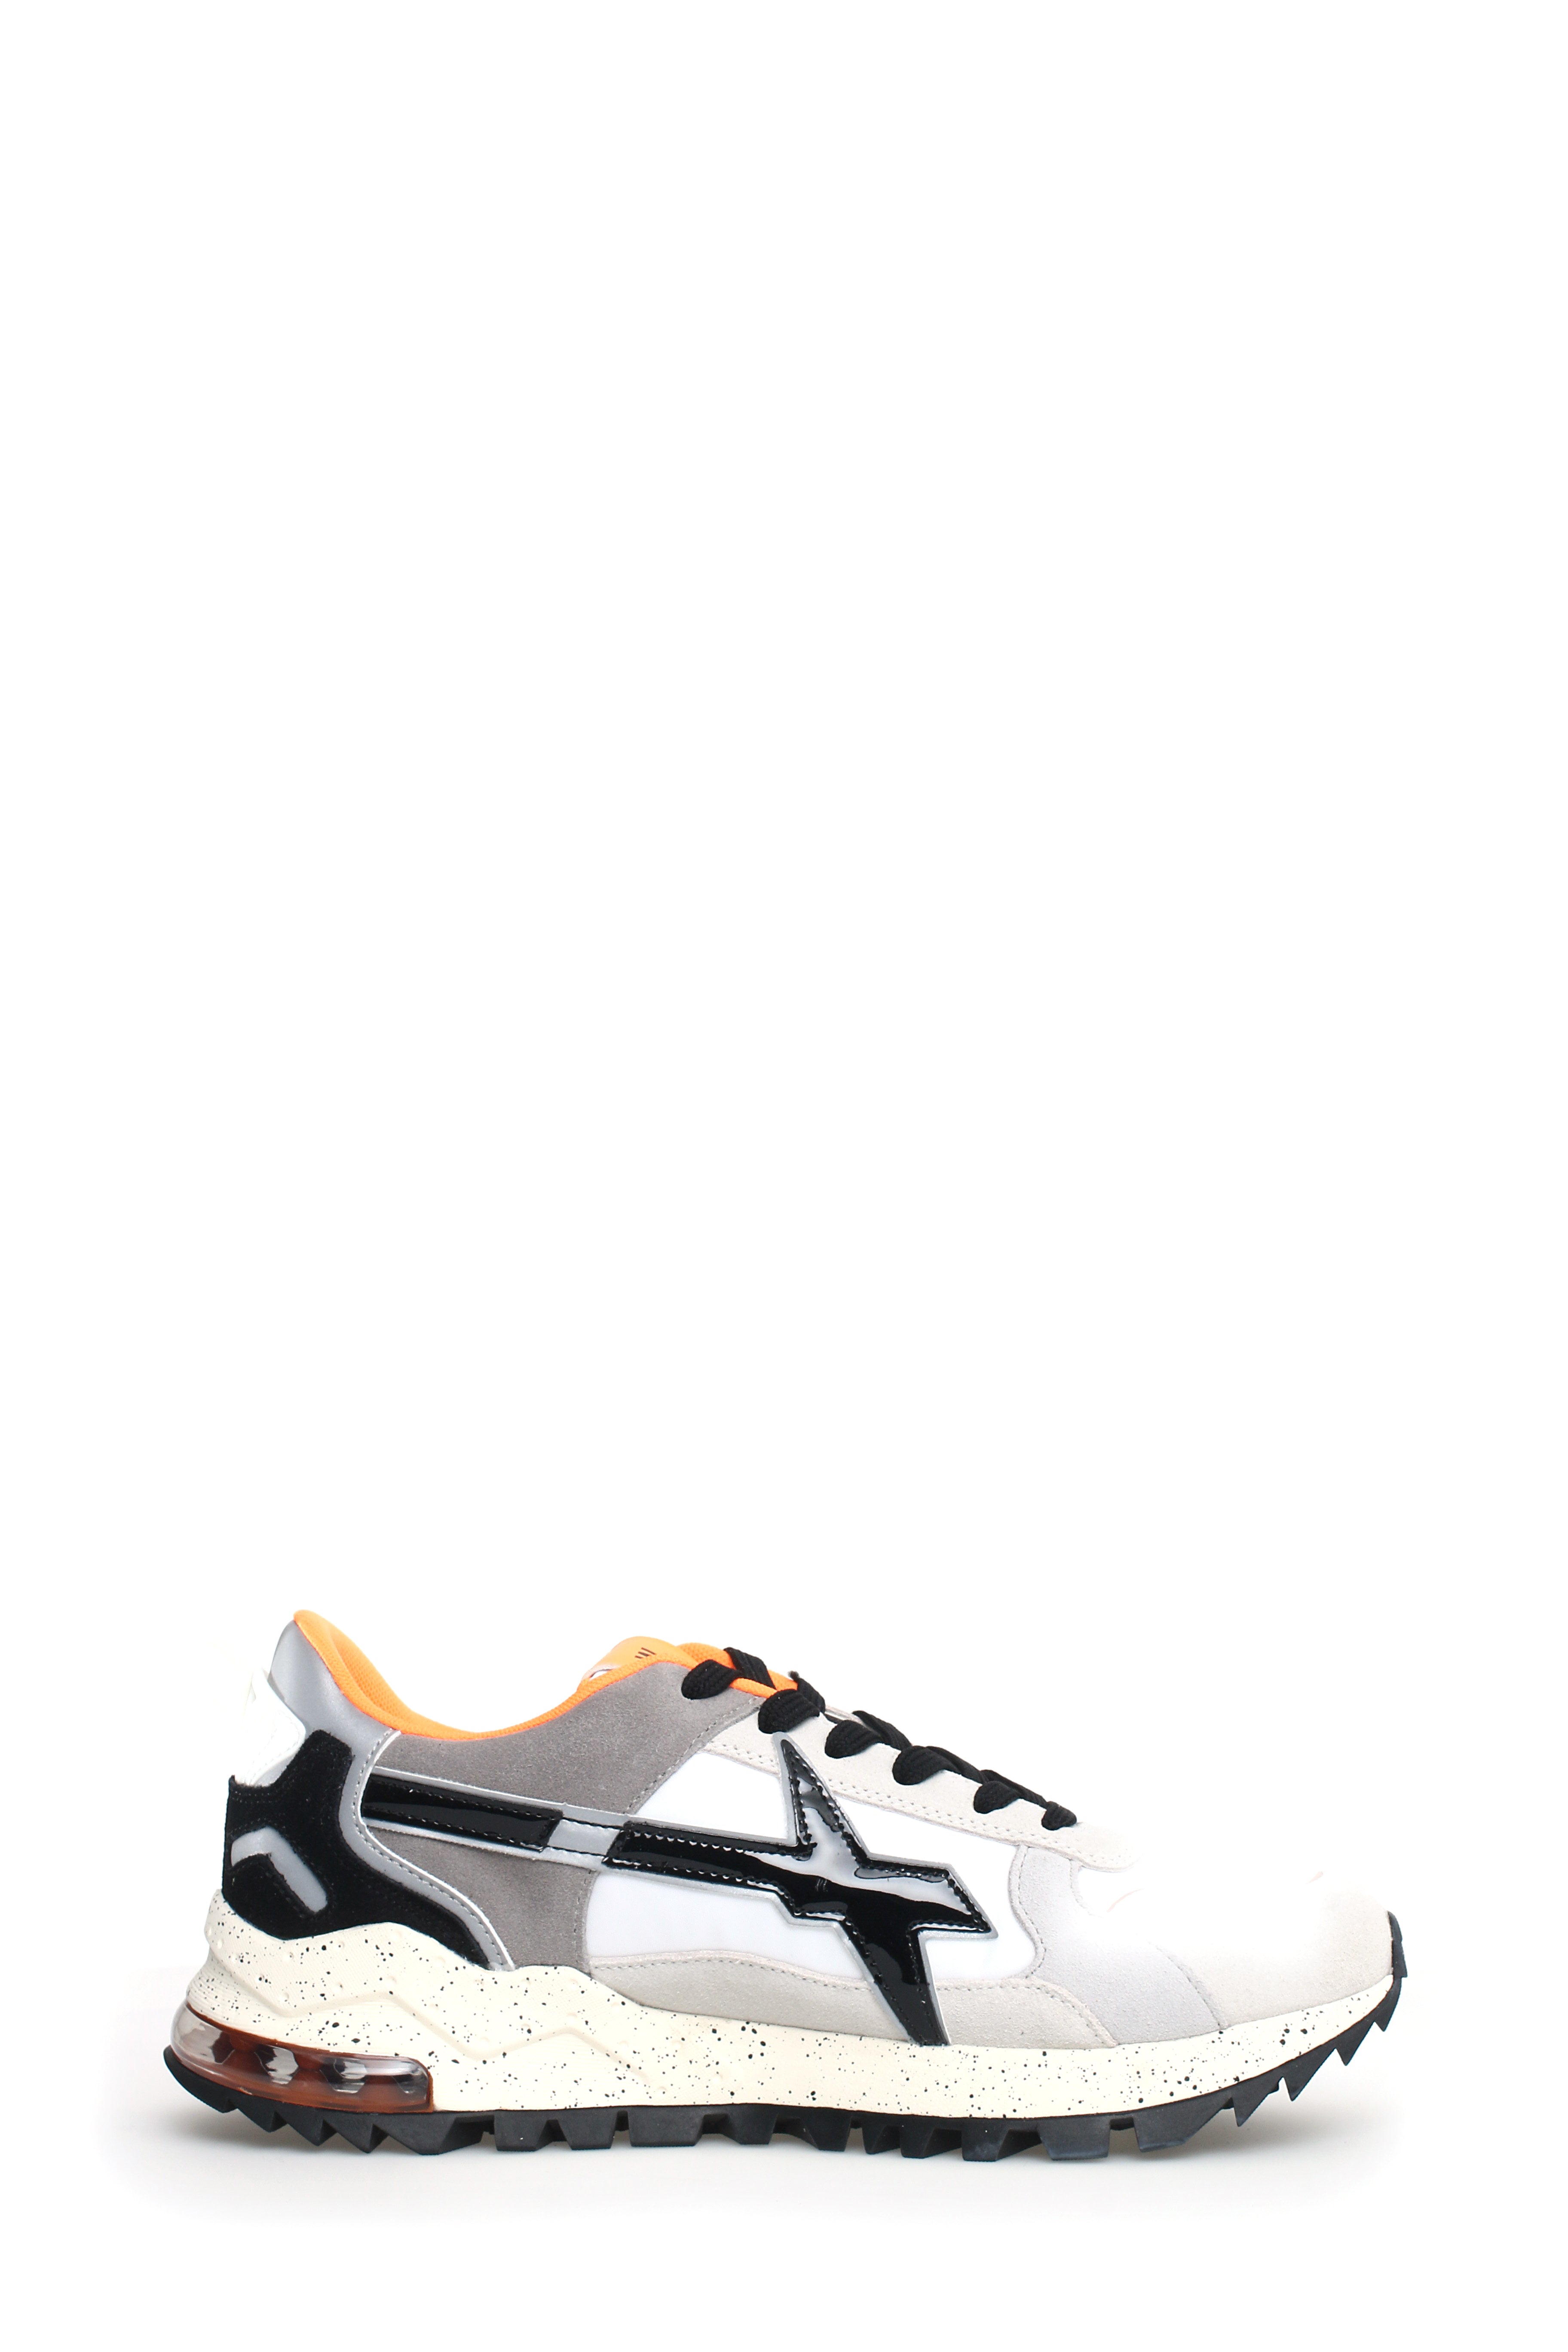 W6YZ-Sneaker Uomo K3 M-White Grey Black